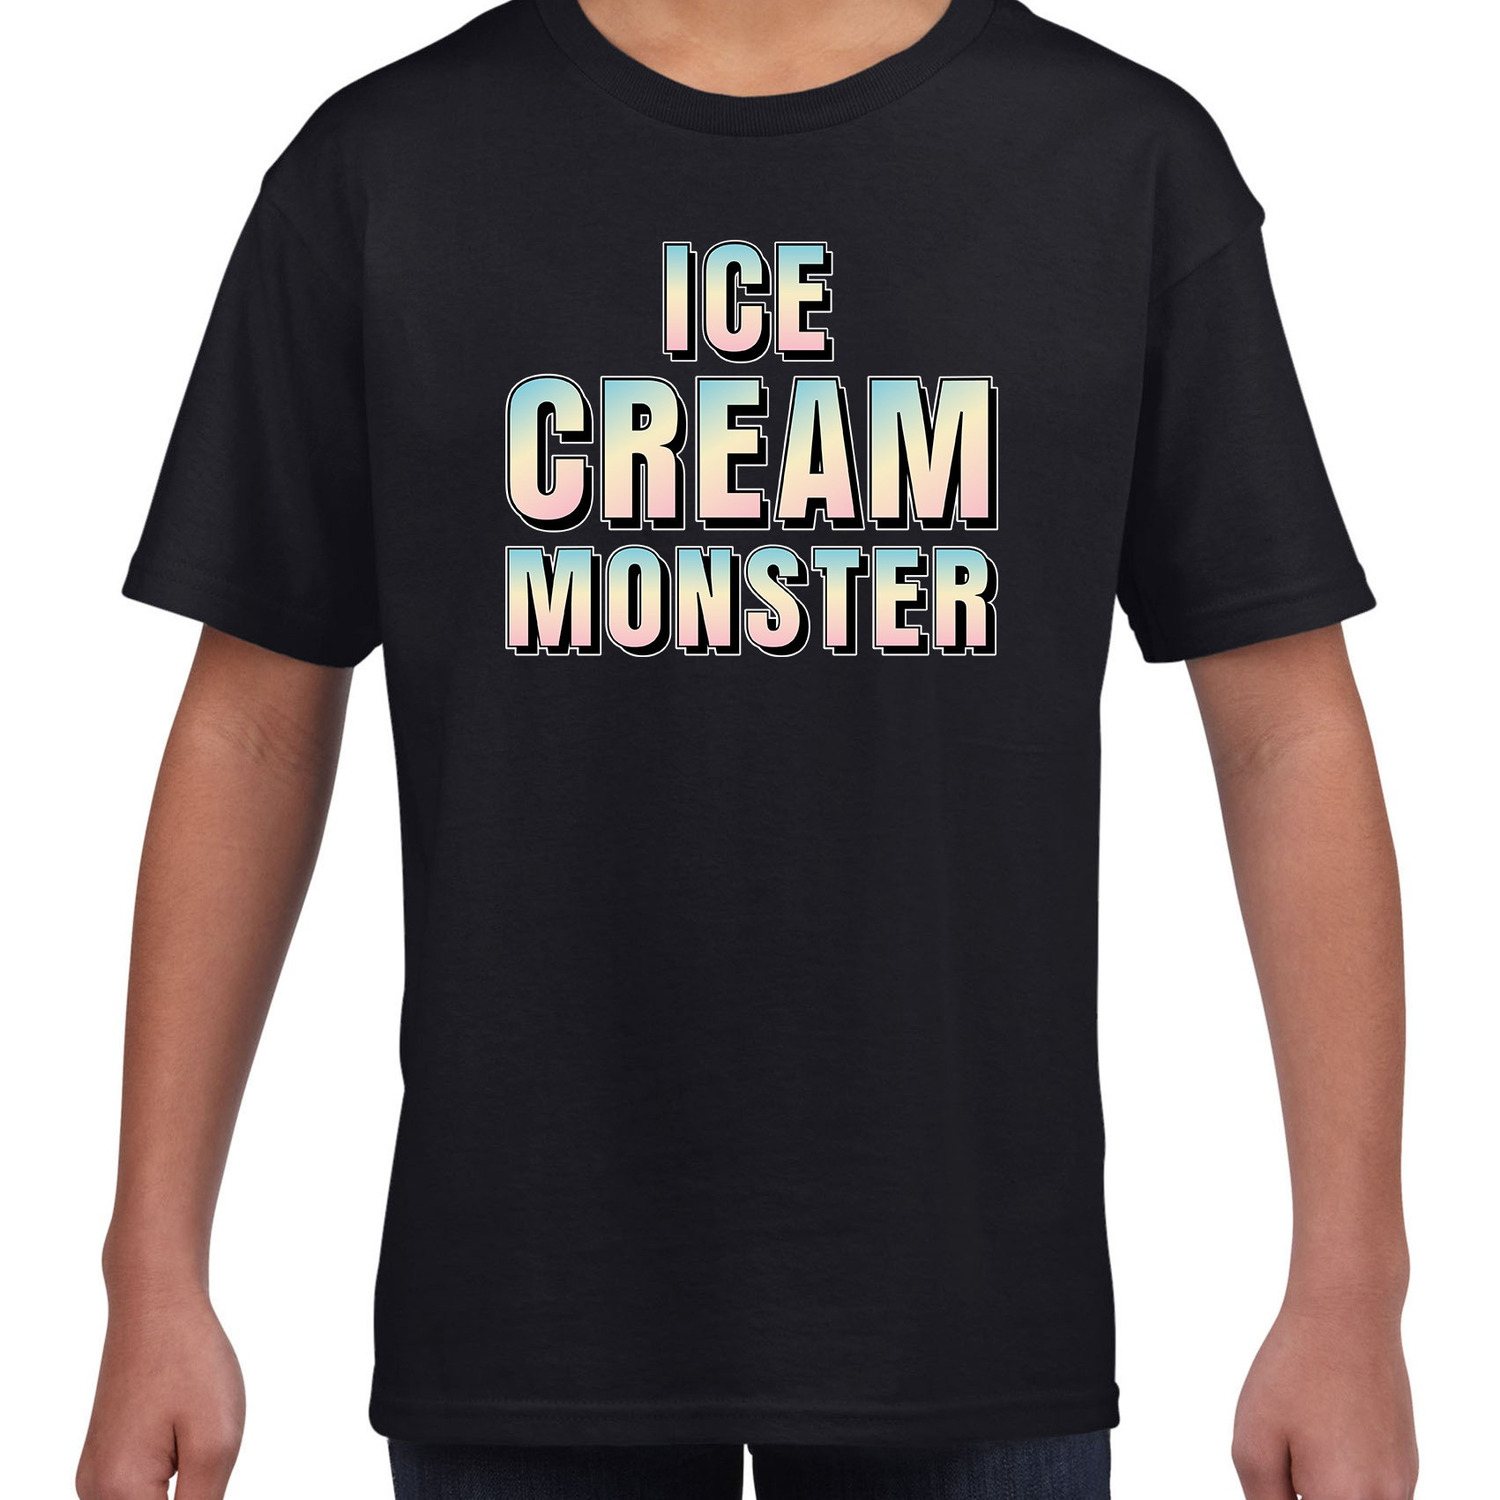 Ice cream monster fun tekst t-shirt zwart kids